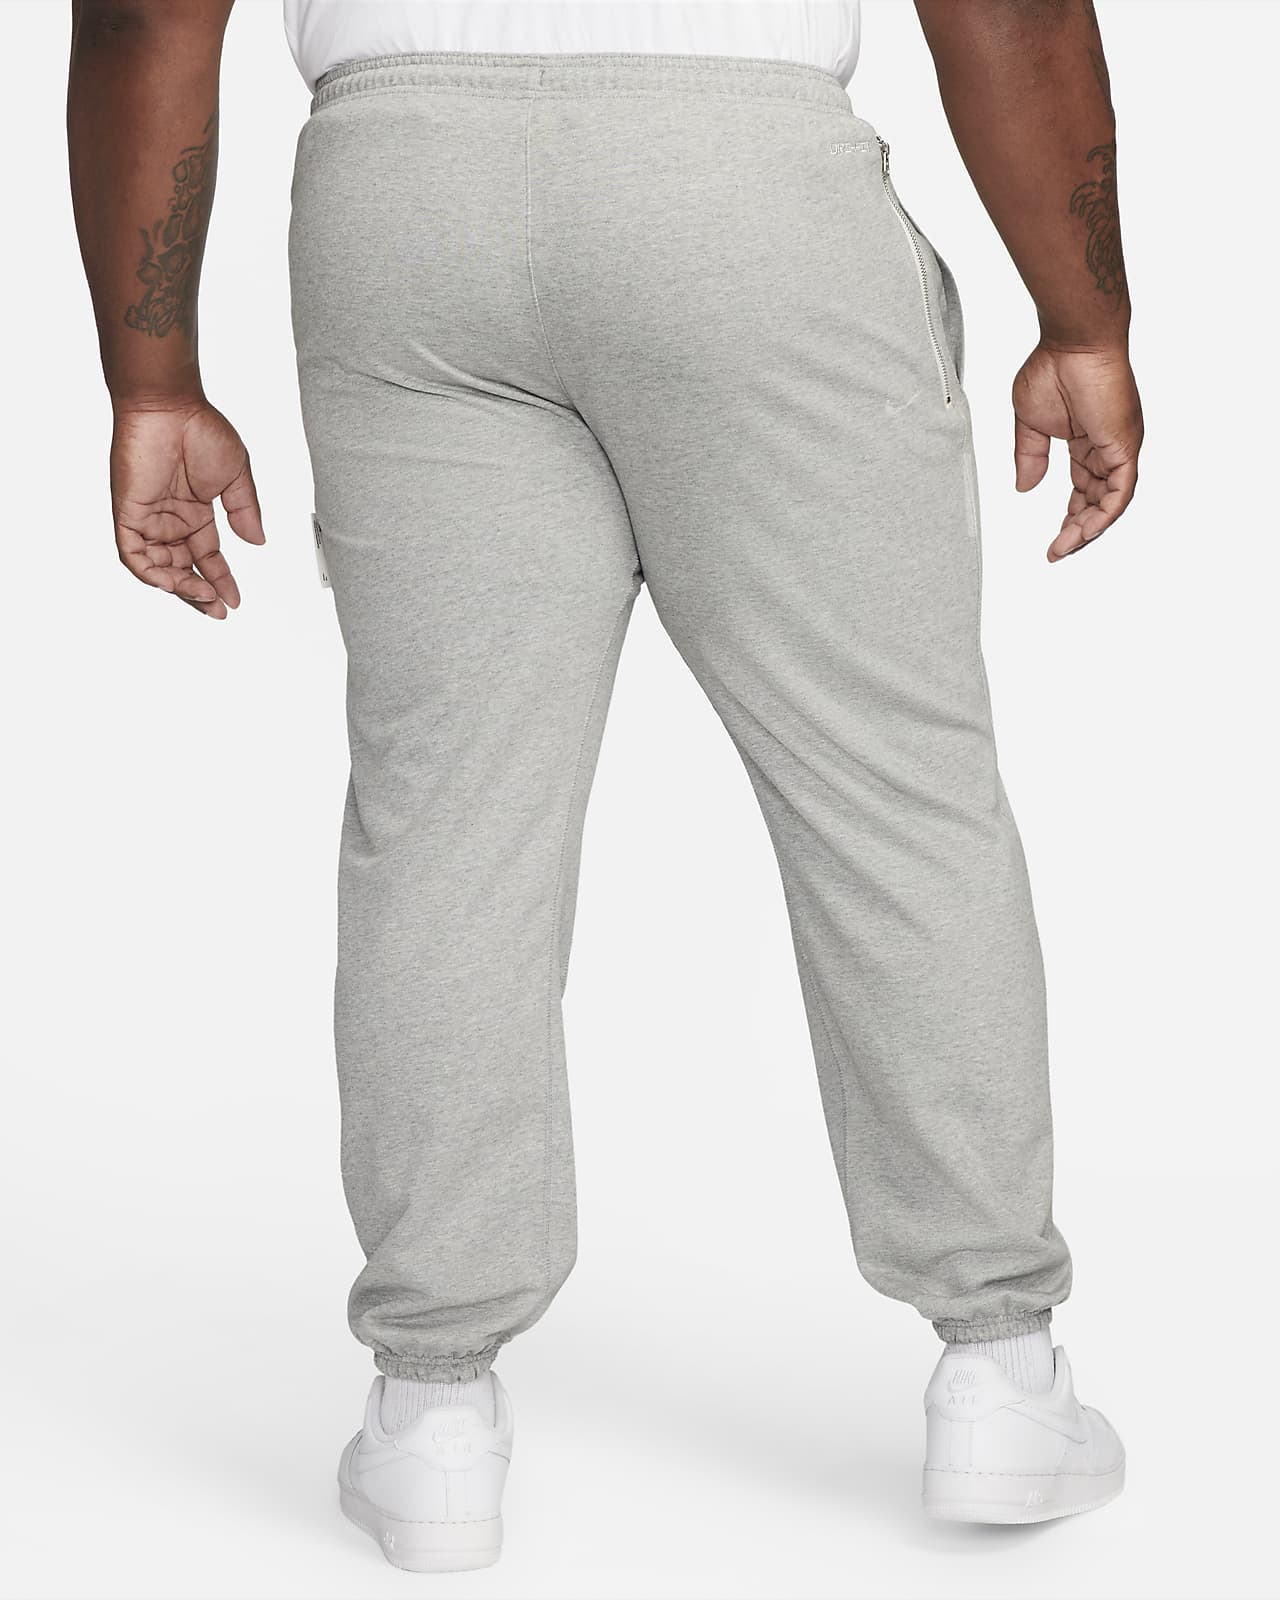 Nike Standard Issue Men's Dri-FIT Basketball Pants.